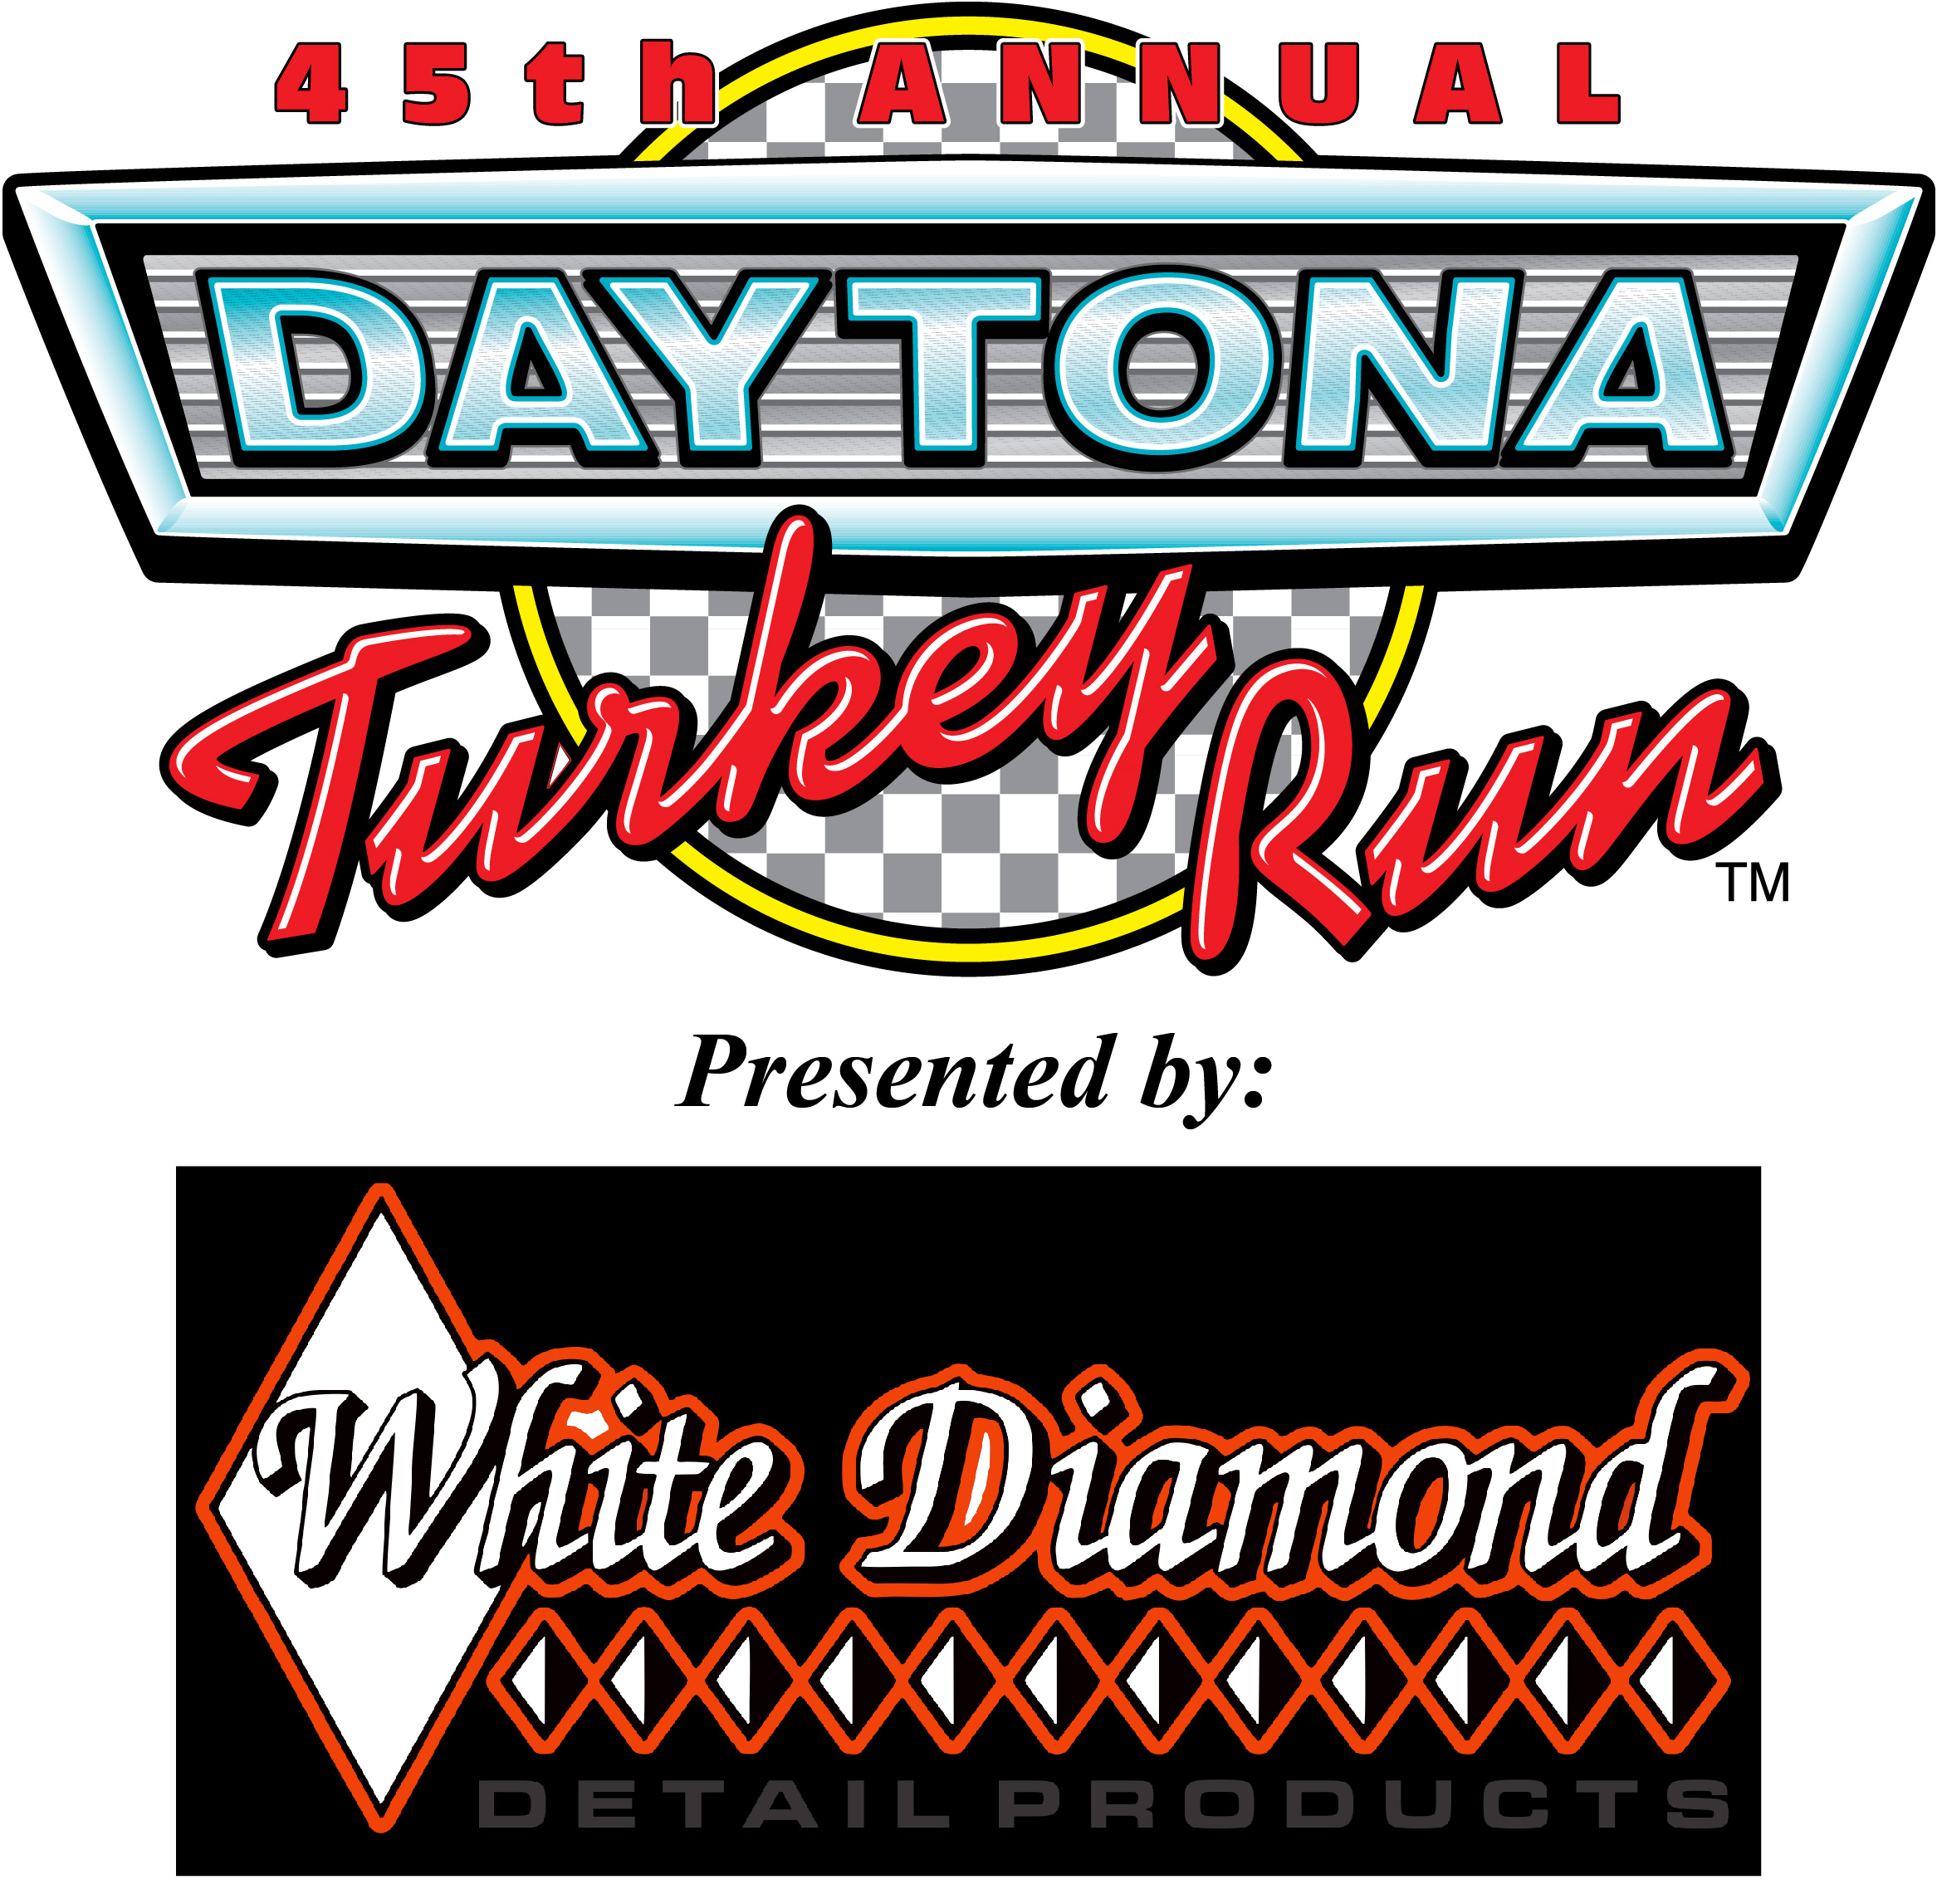 Daytona Turkey Run And Ticket Giveaway 